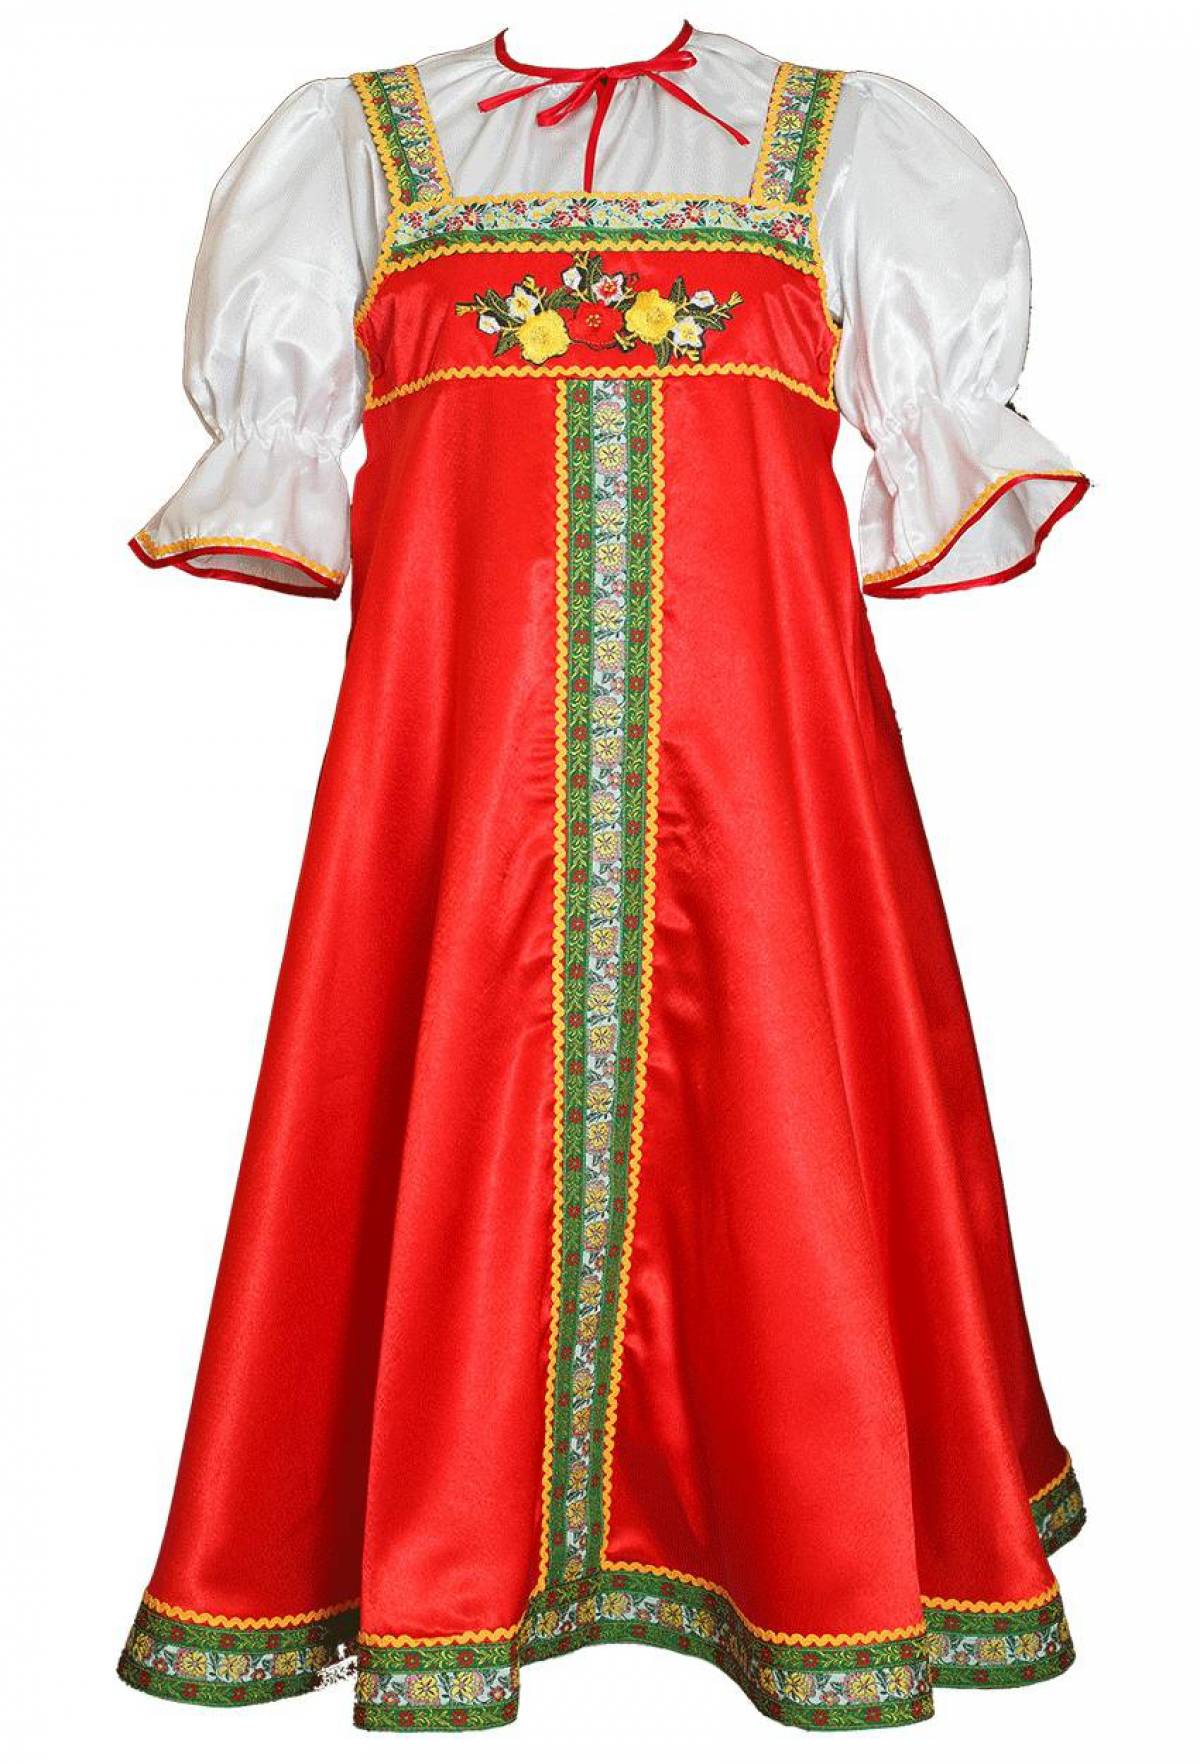 Русский народный костюм сарафан